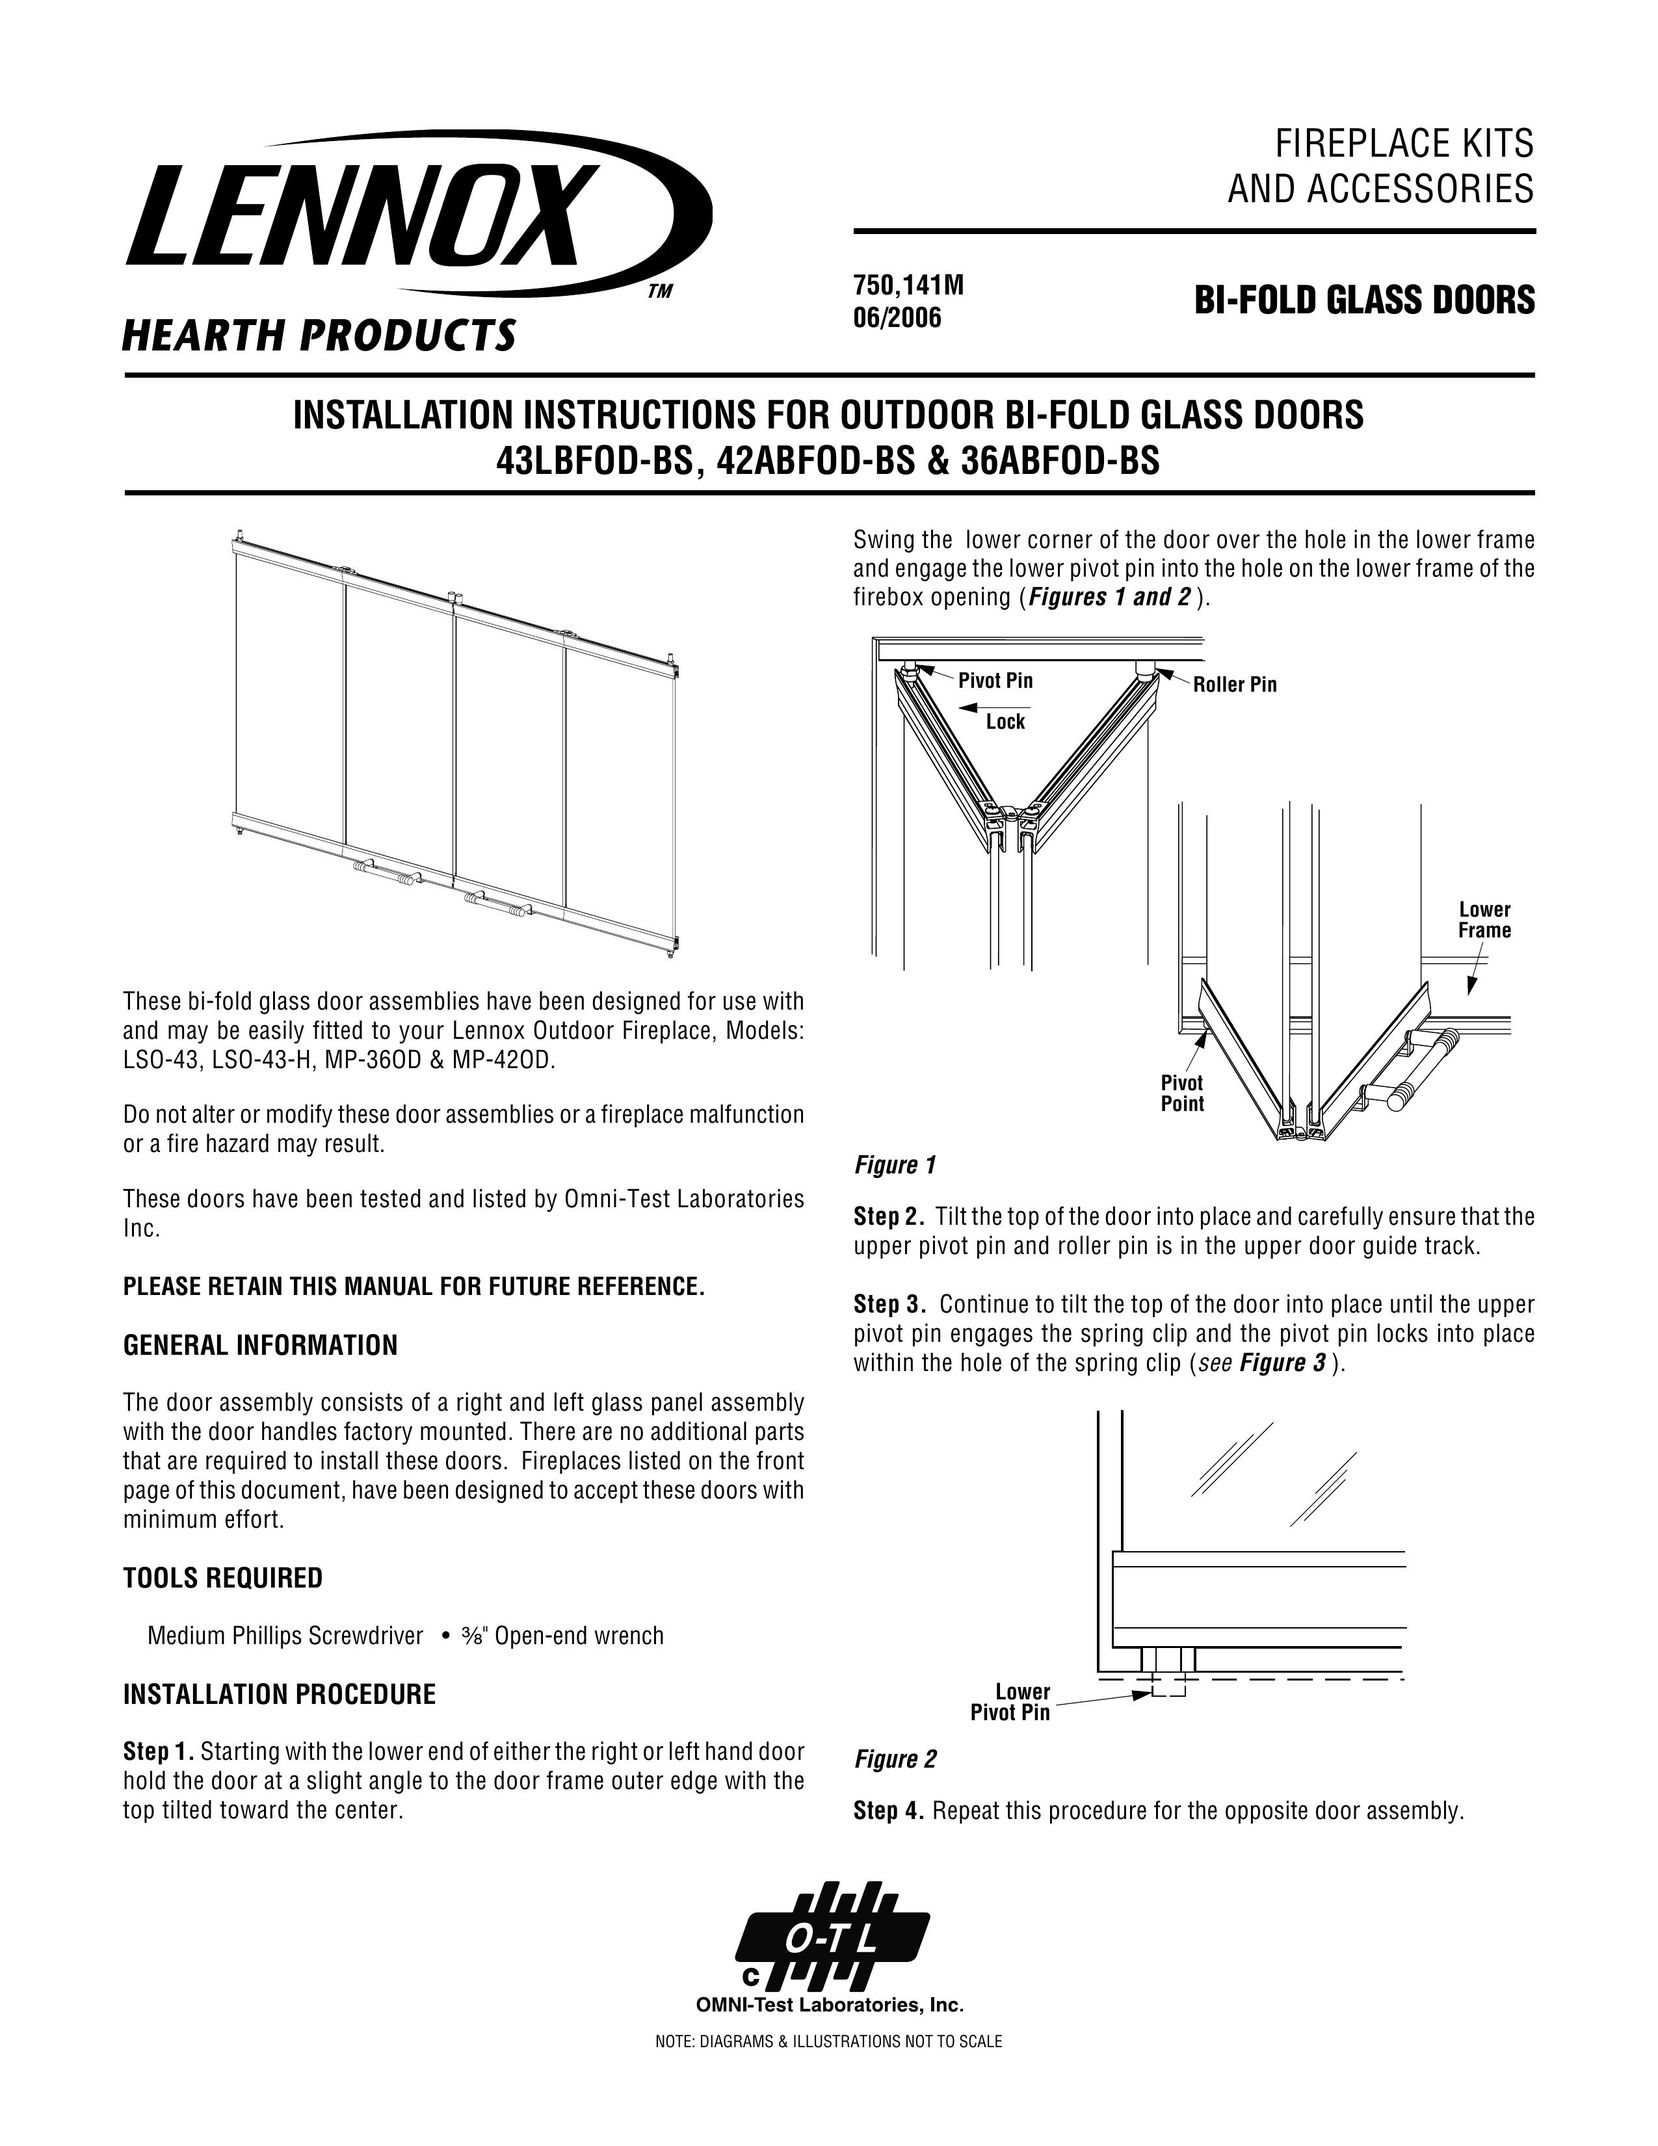 Lennox Hearth MP-36OD Door User Manual